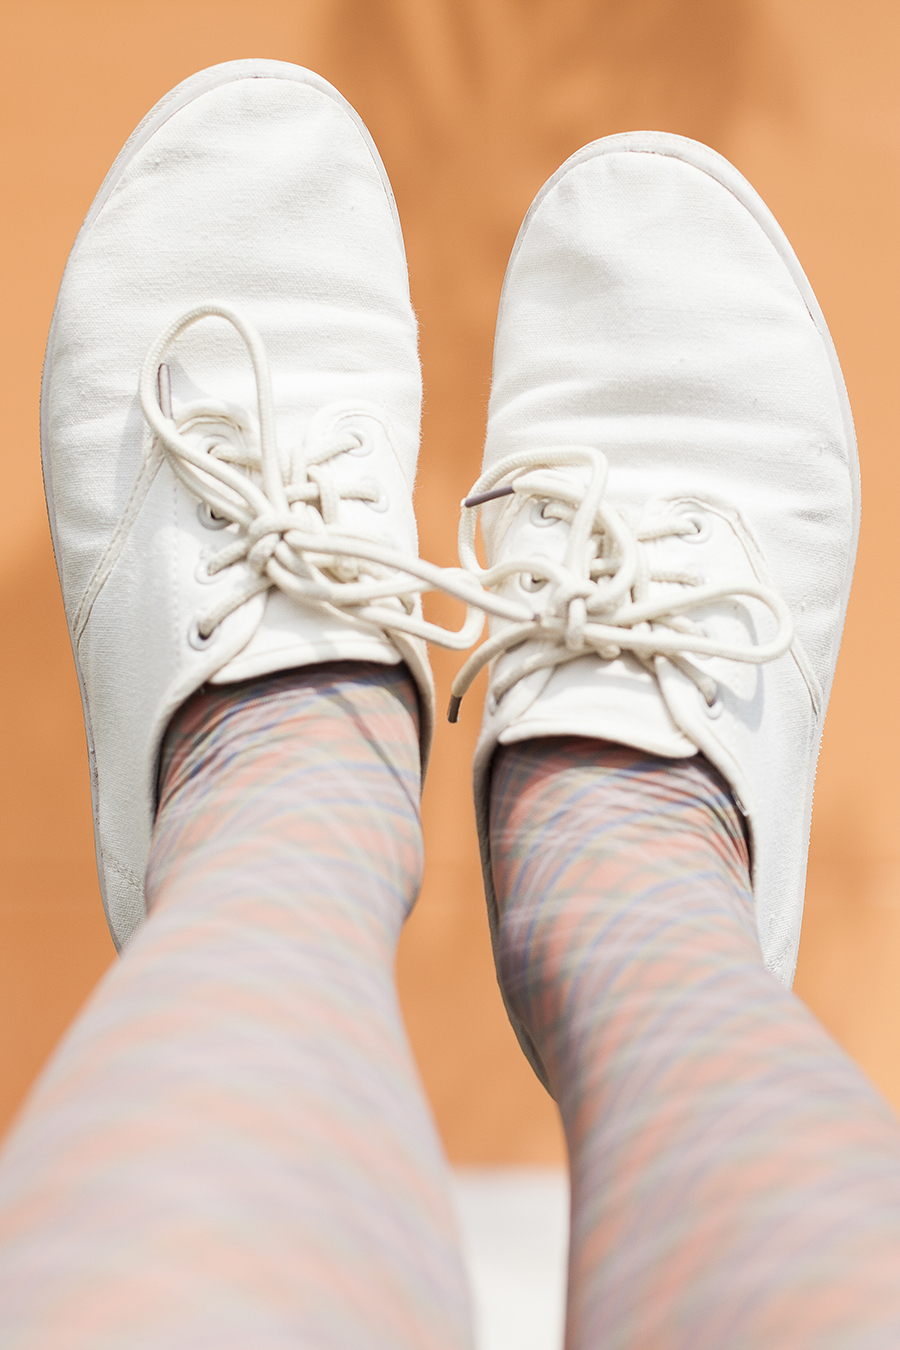 Topshop orange plaid tights, Cotton On beige lace-ups.